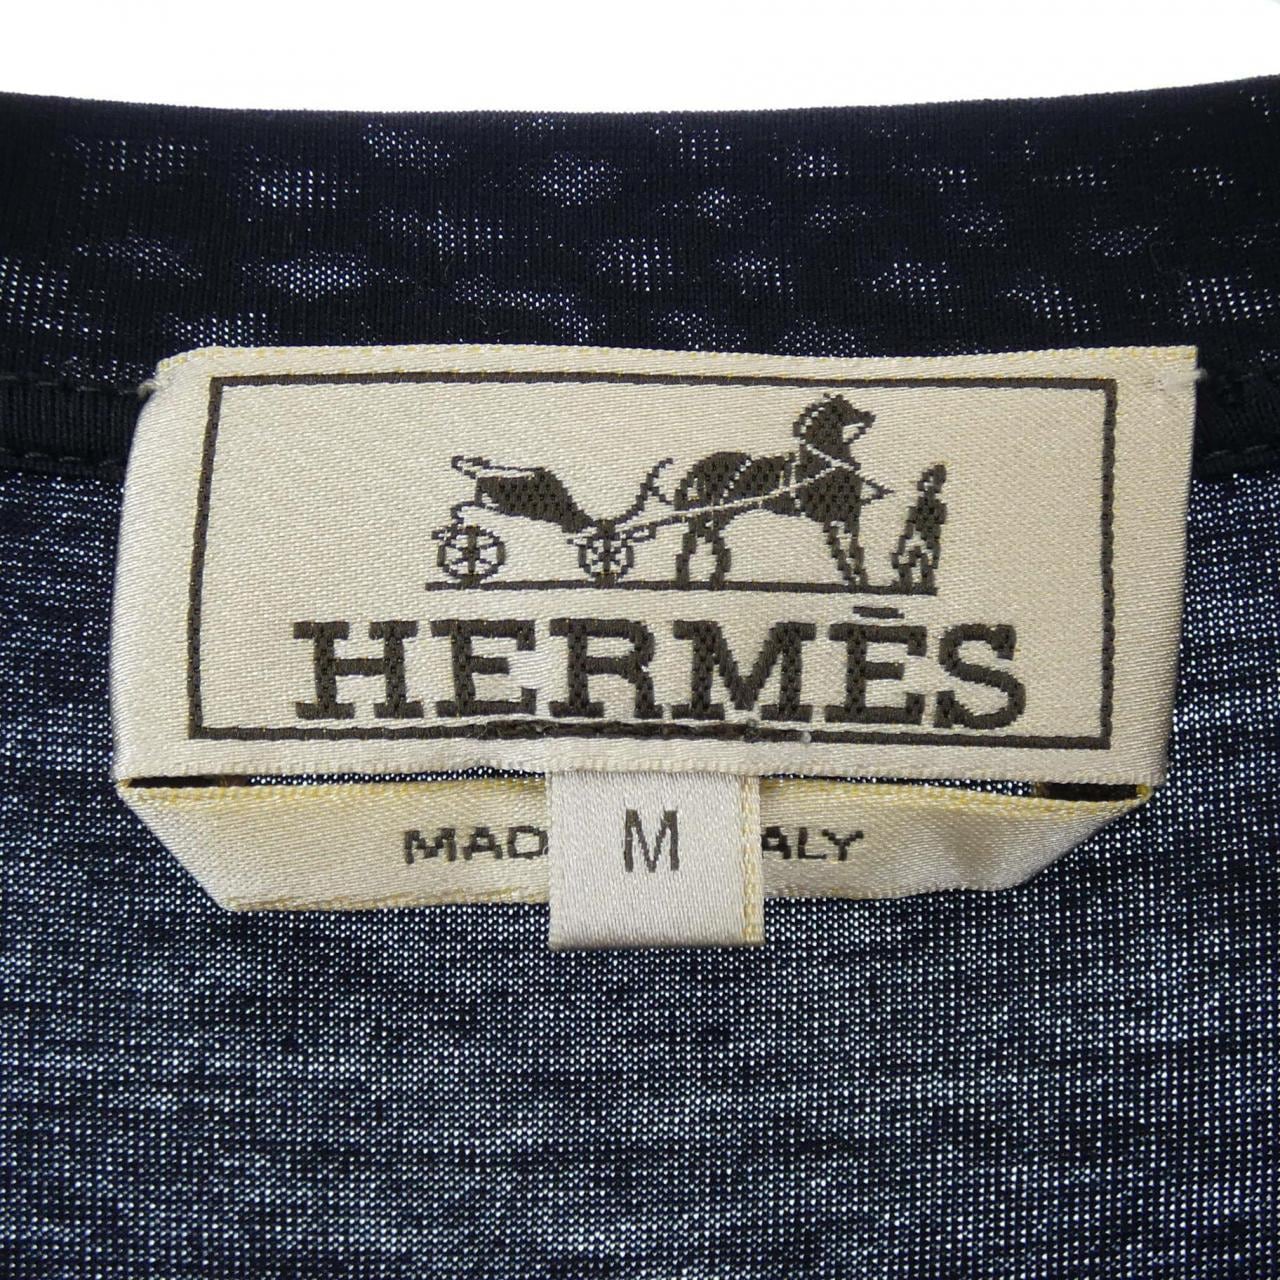 HERMES爱马仕T恤